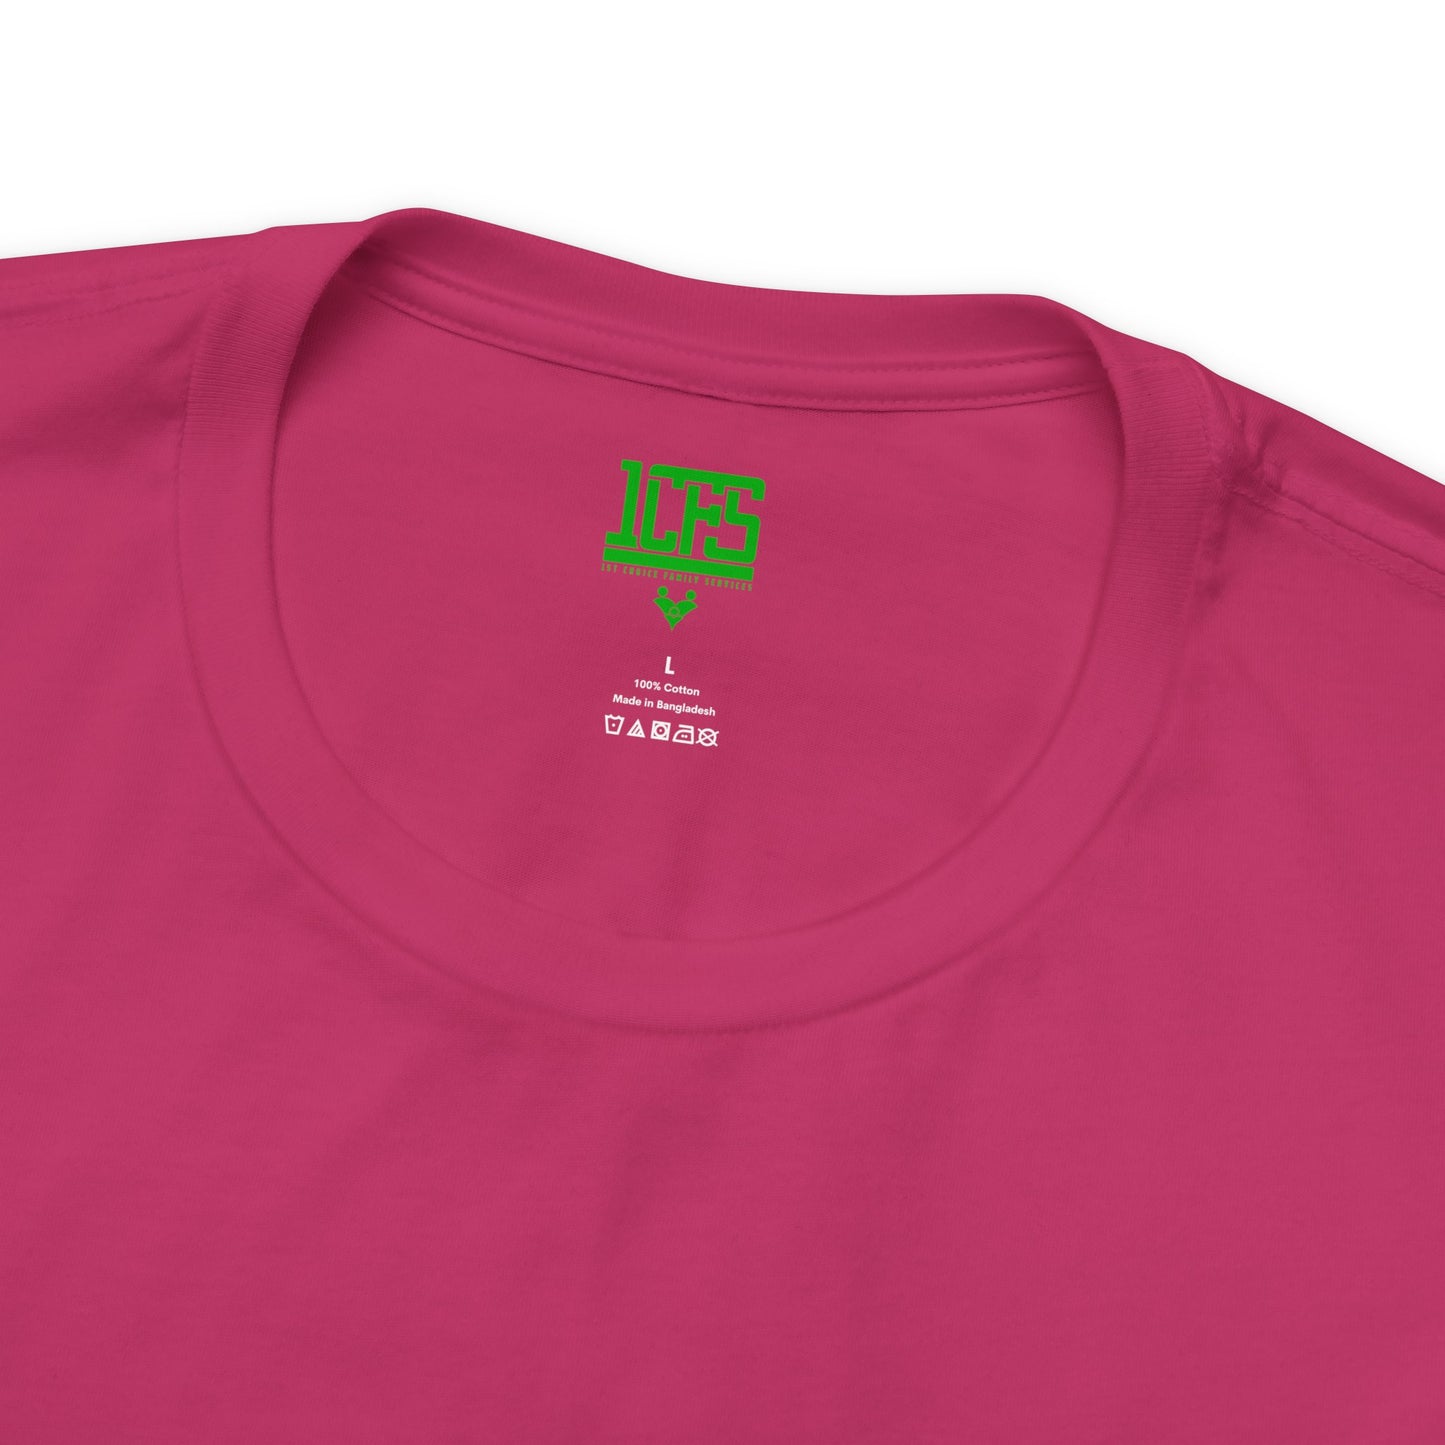 Berry Pink w/Green Print